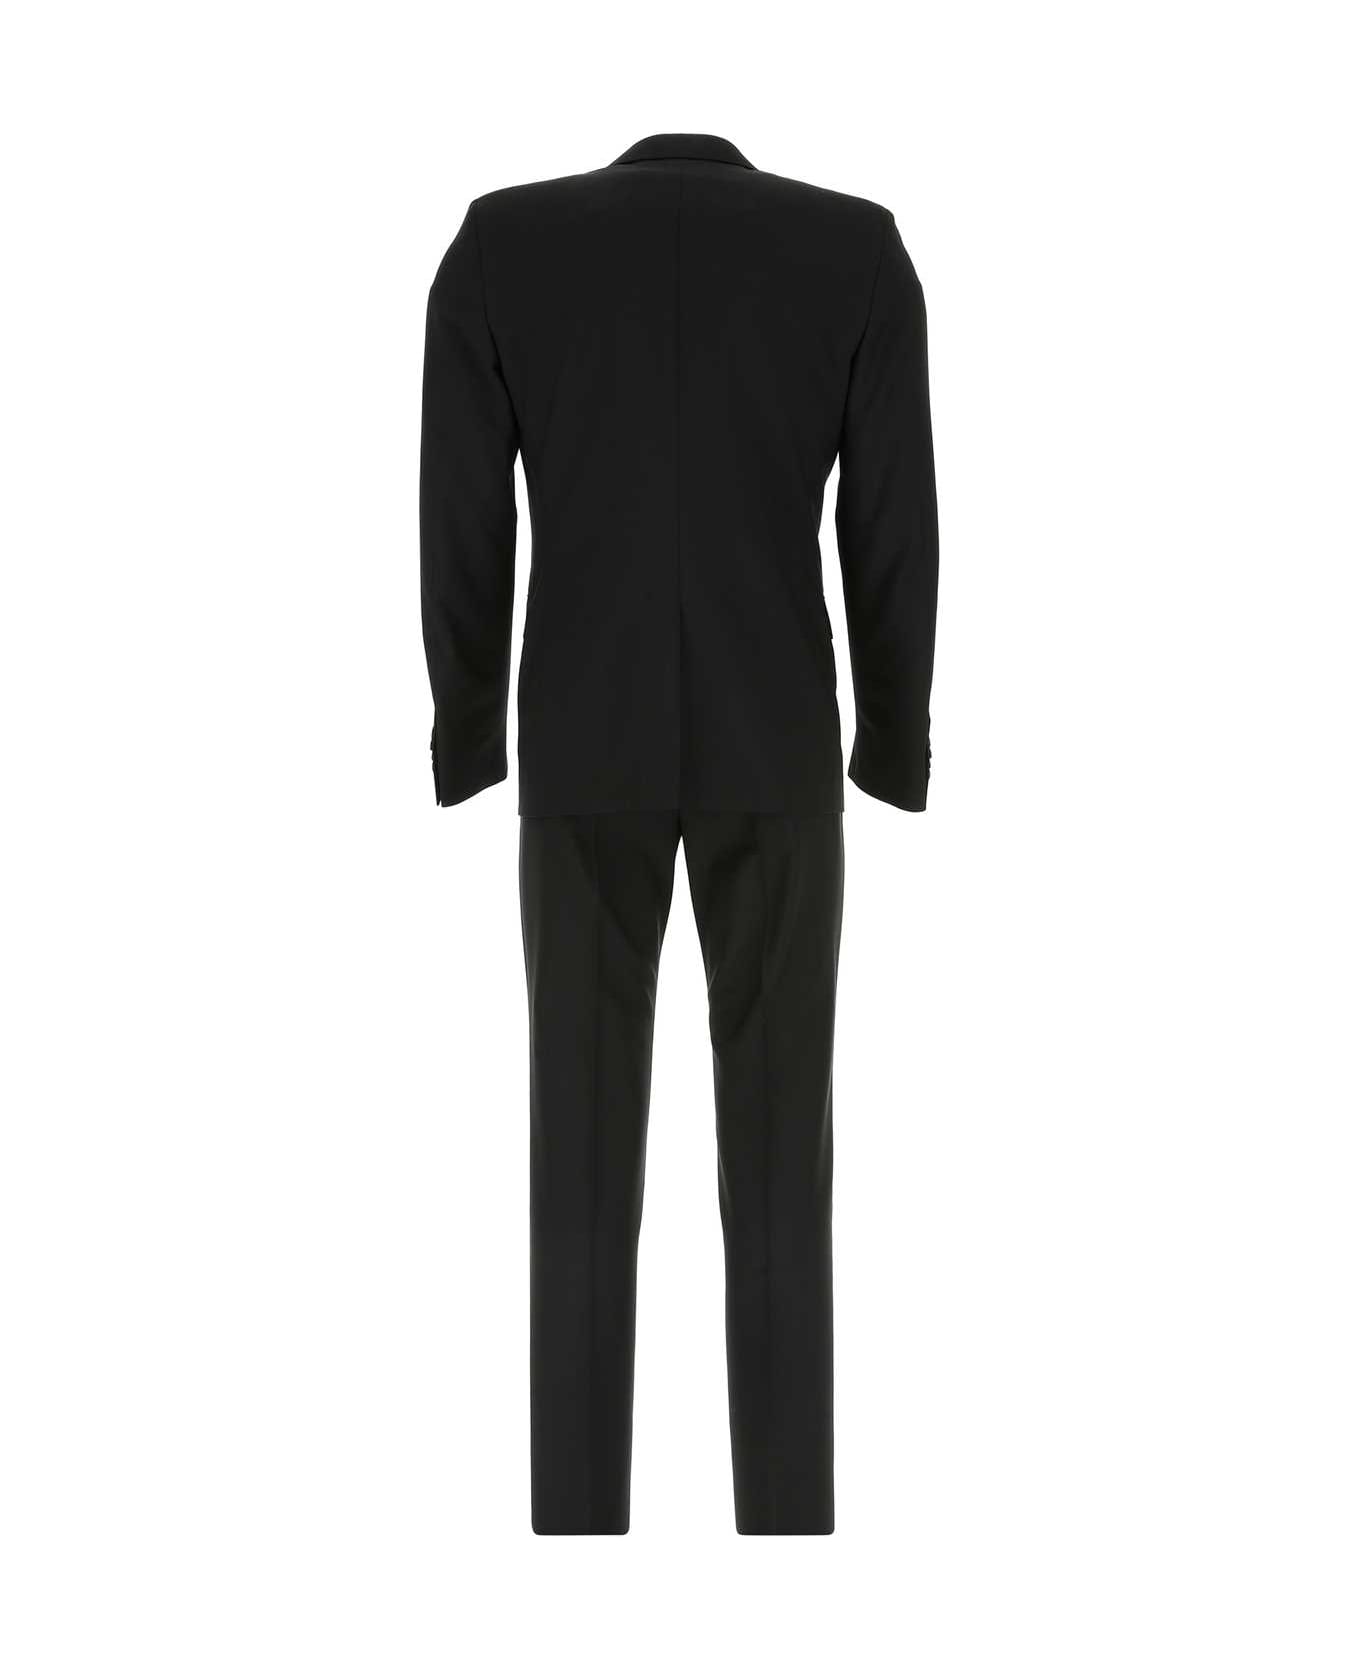 Prada Black Wool Blend Suit - NERO スーツ